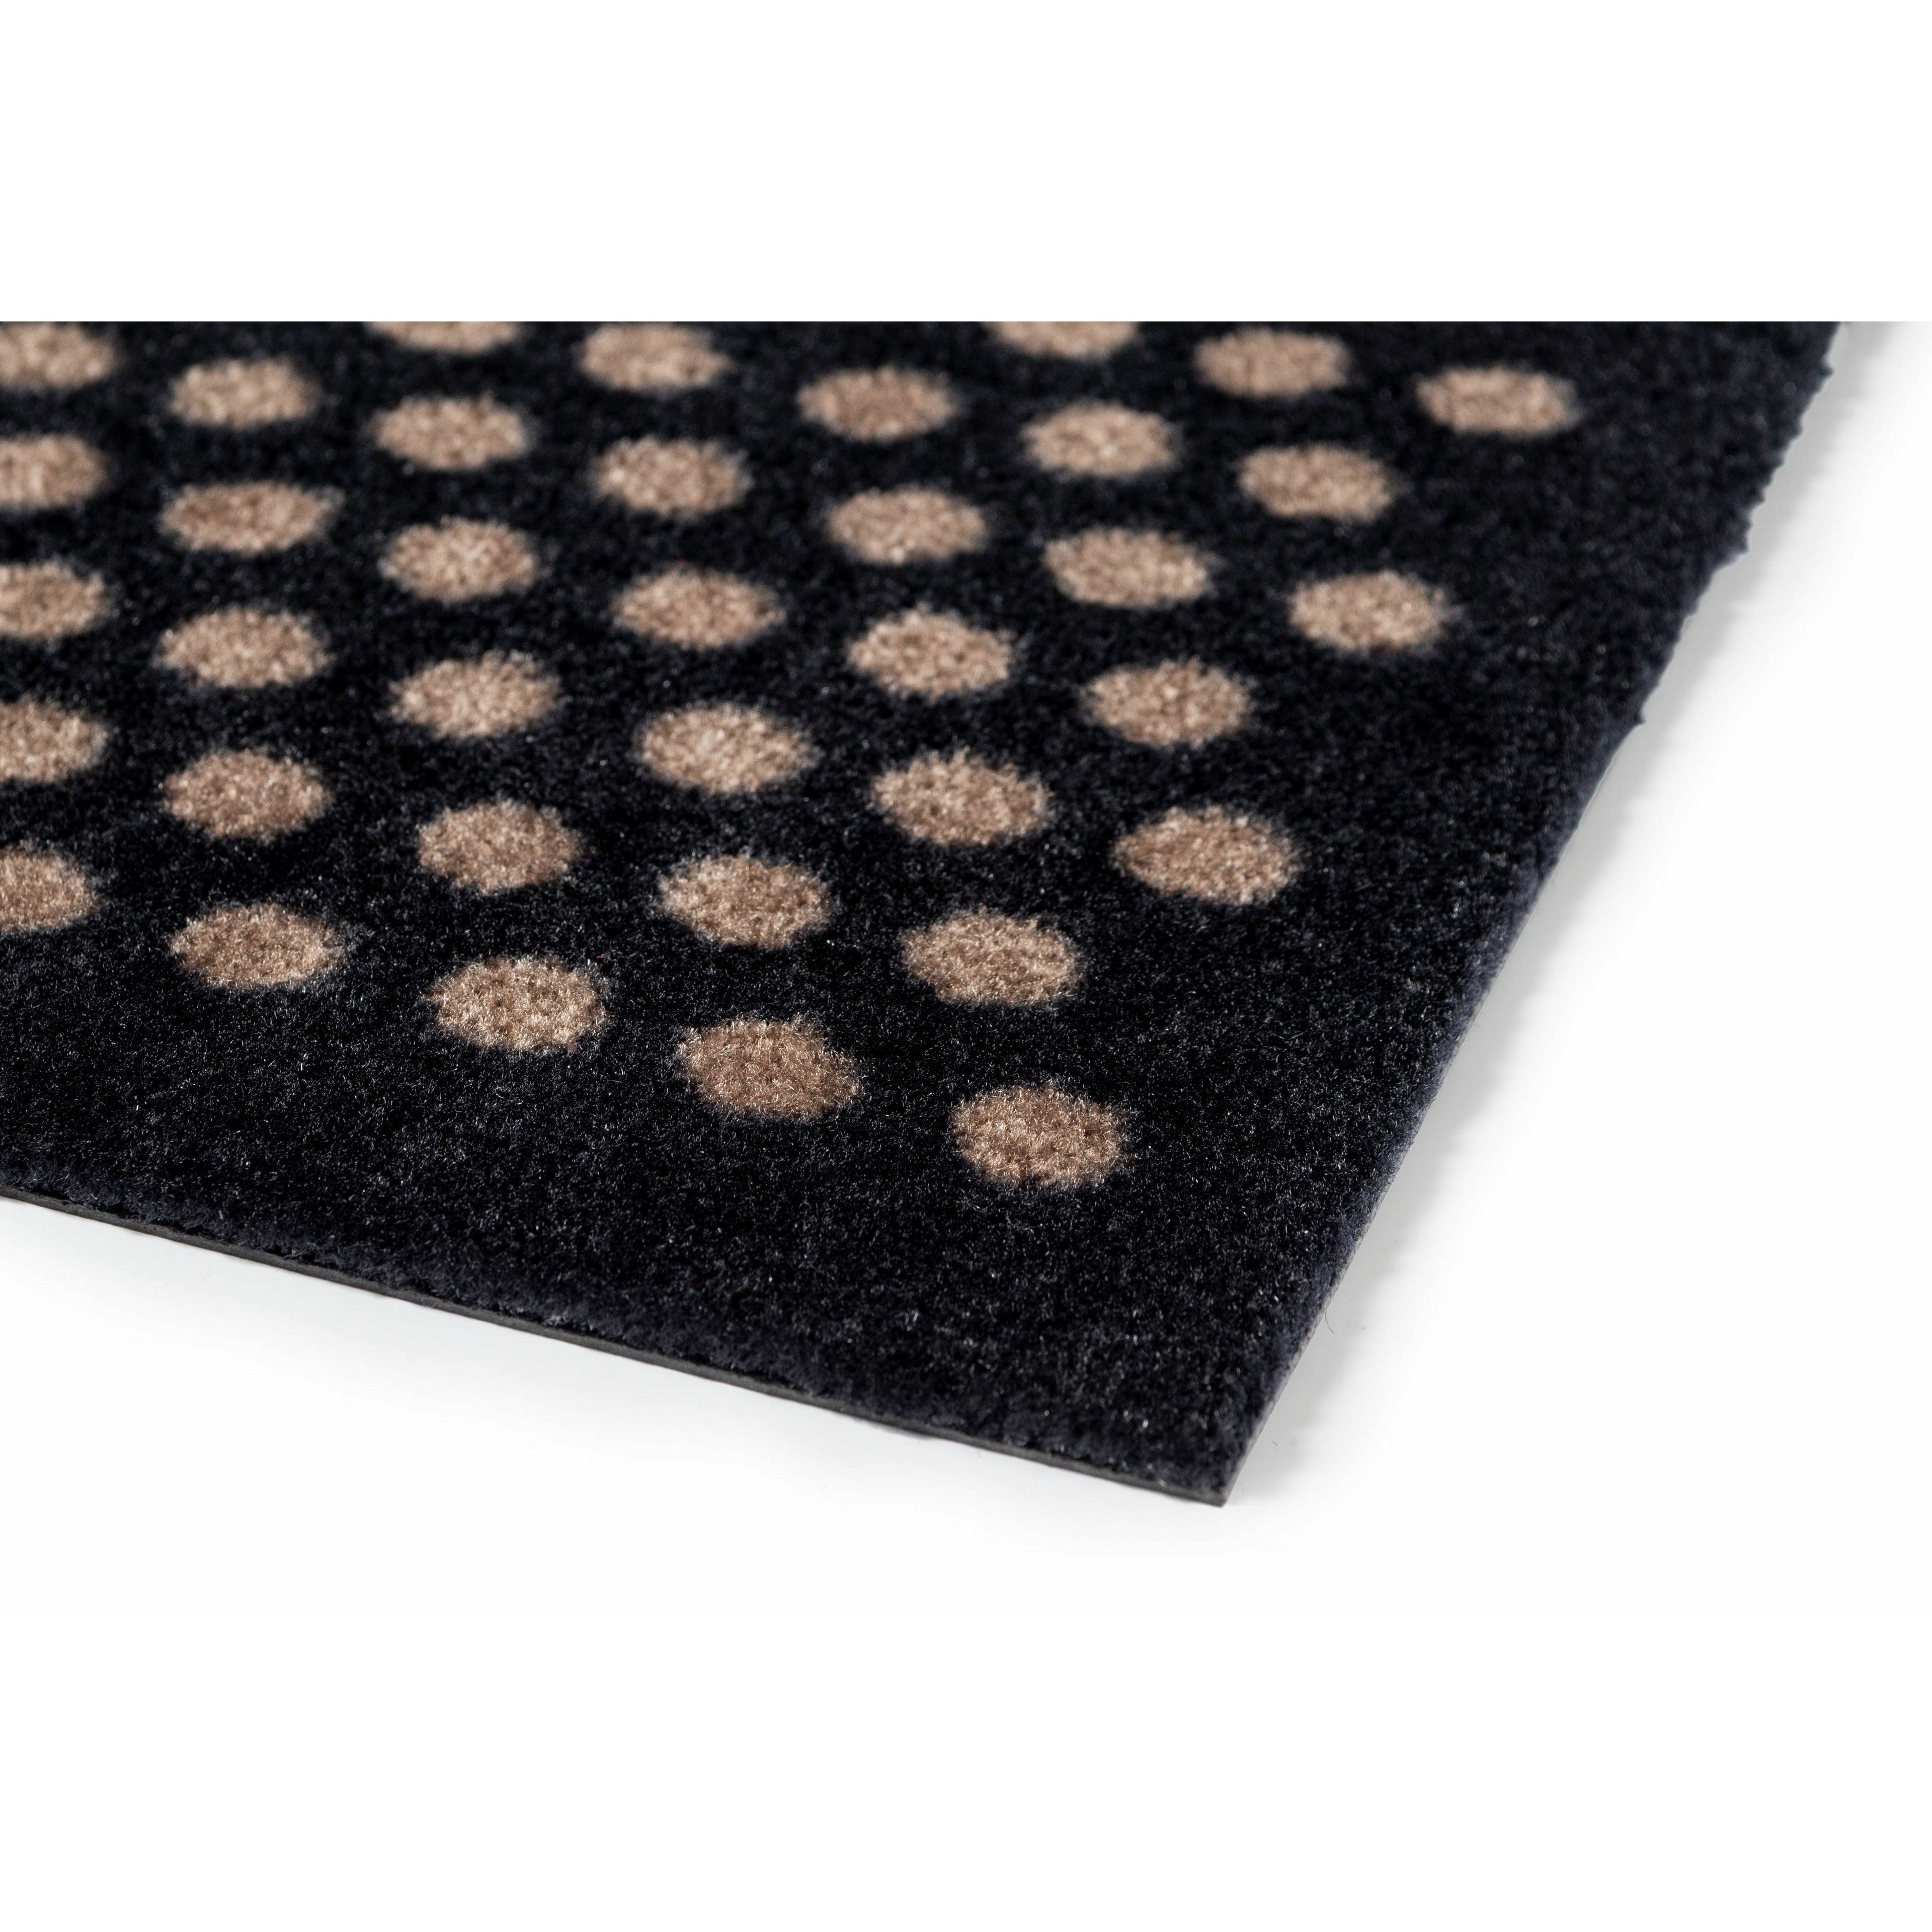 Floor mat 67 x 150 cm - dots/black sand